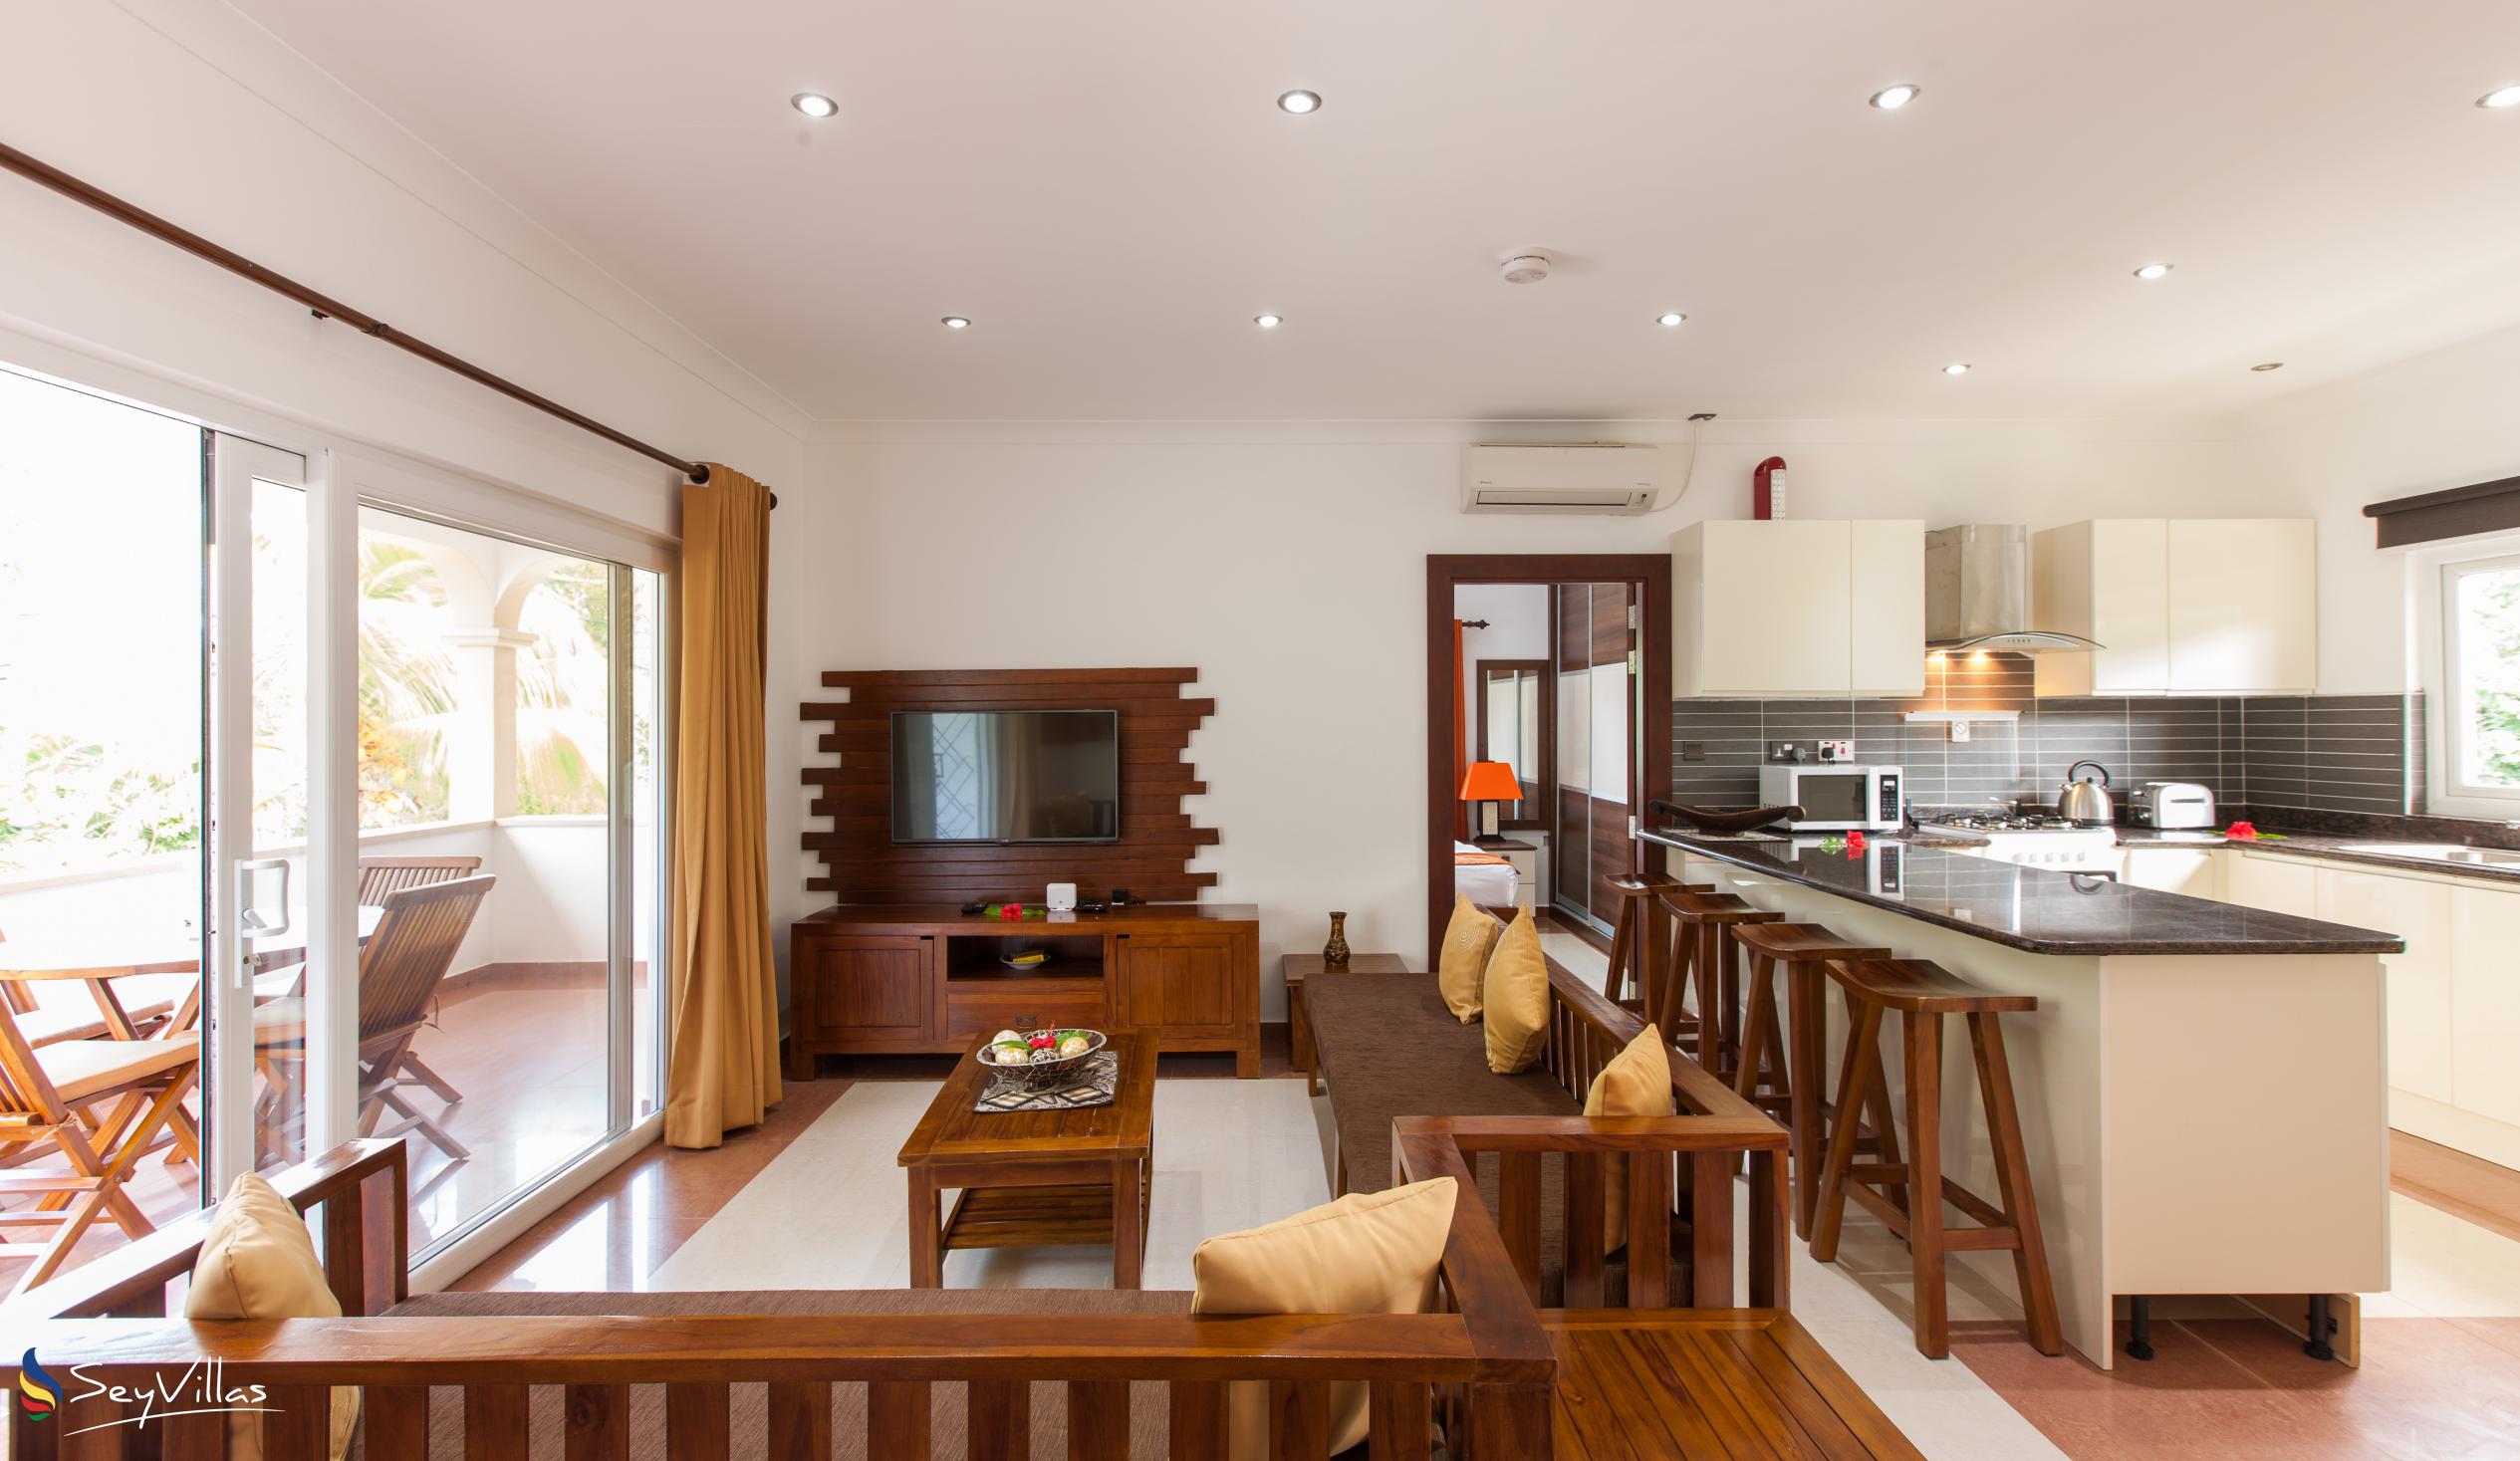 Photo 13: YASAD Luxury Beach Residence - 3-Bedroom Apartment - Praslin (Seychelles)